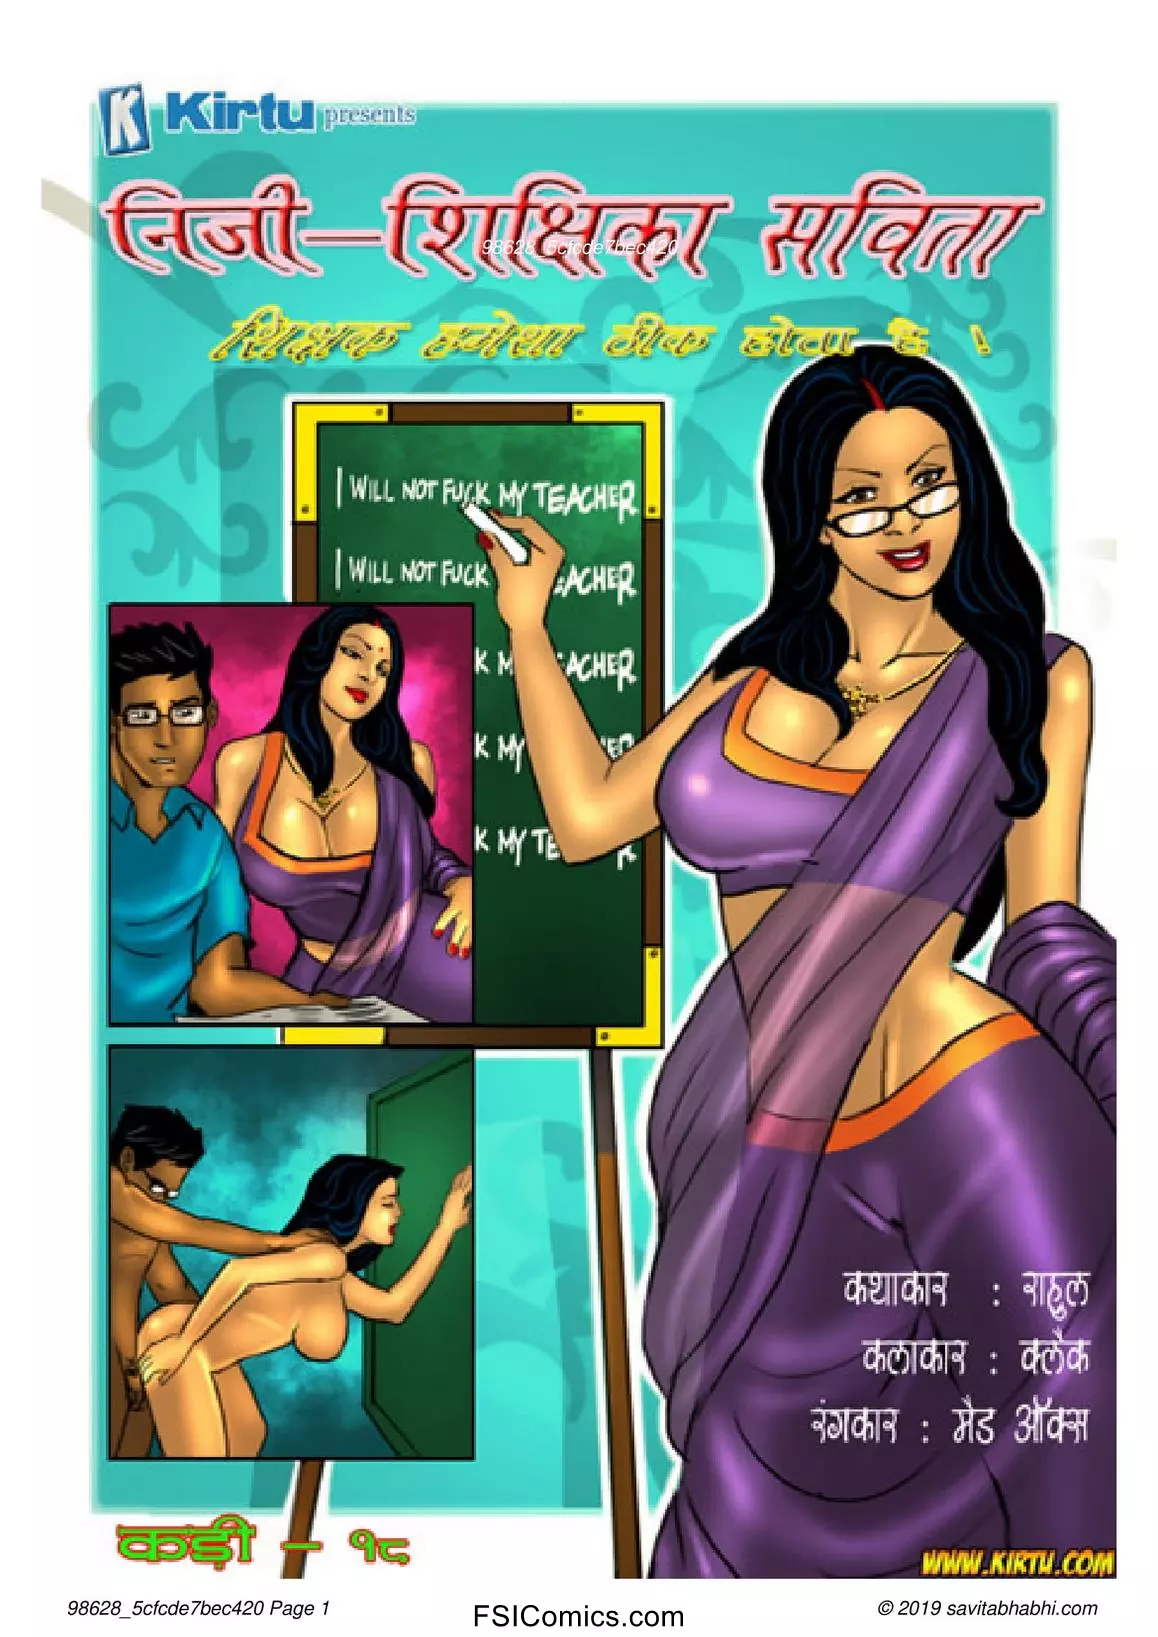 Savita Bhabhi Episode 18 Hindi – Niji Shikshika Savita (निजी शिक्षिका सविता) - 39 - FSIComics